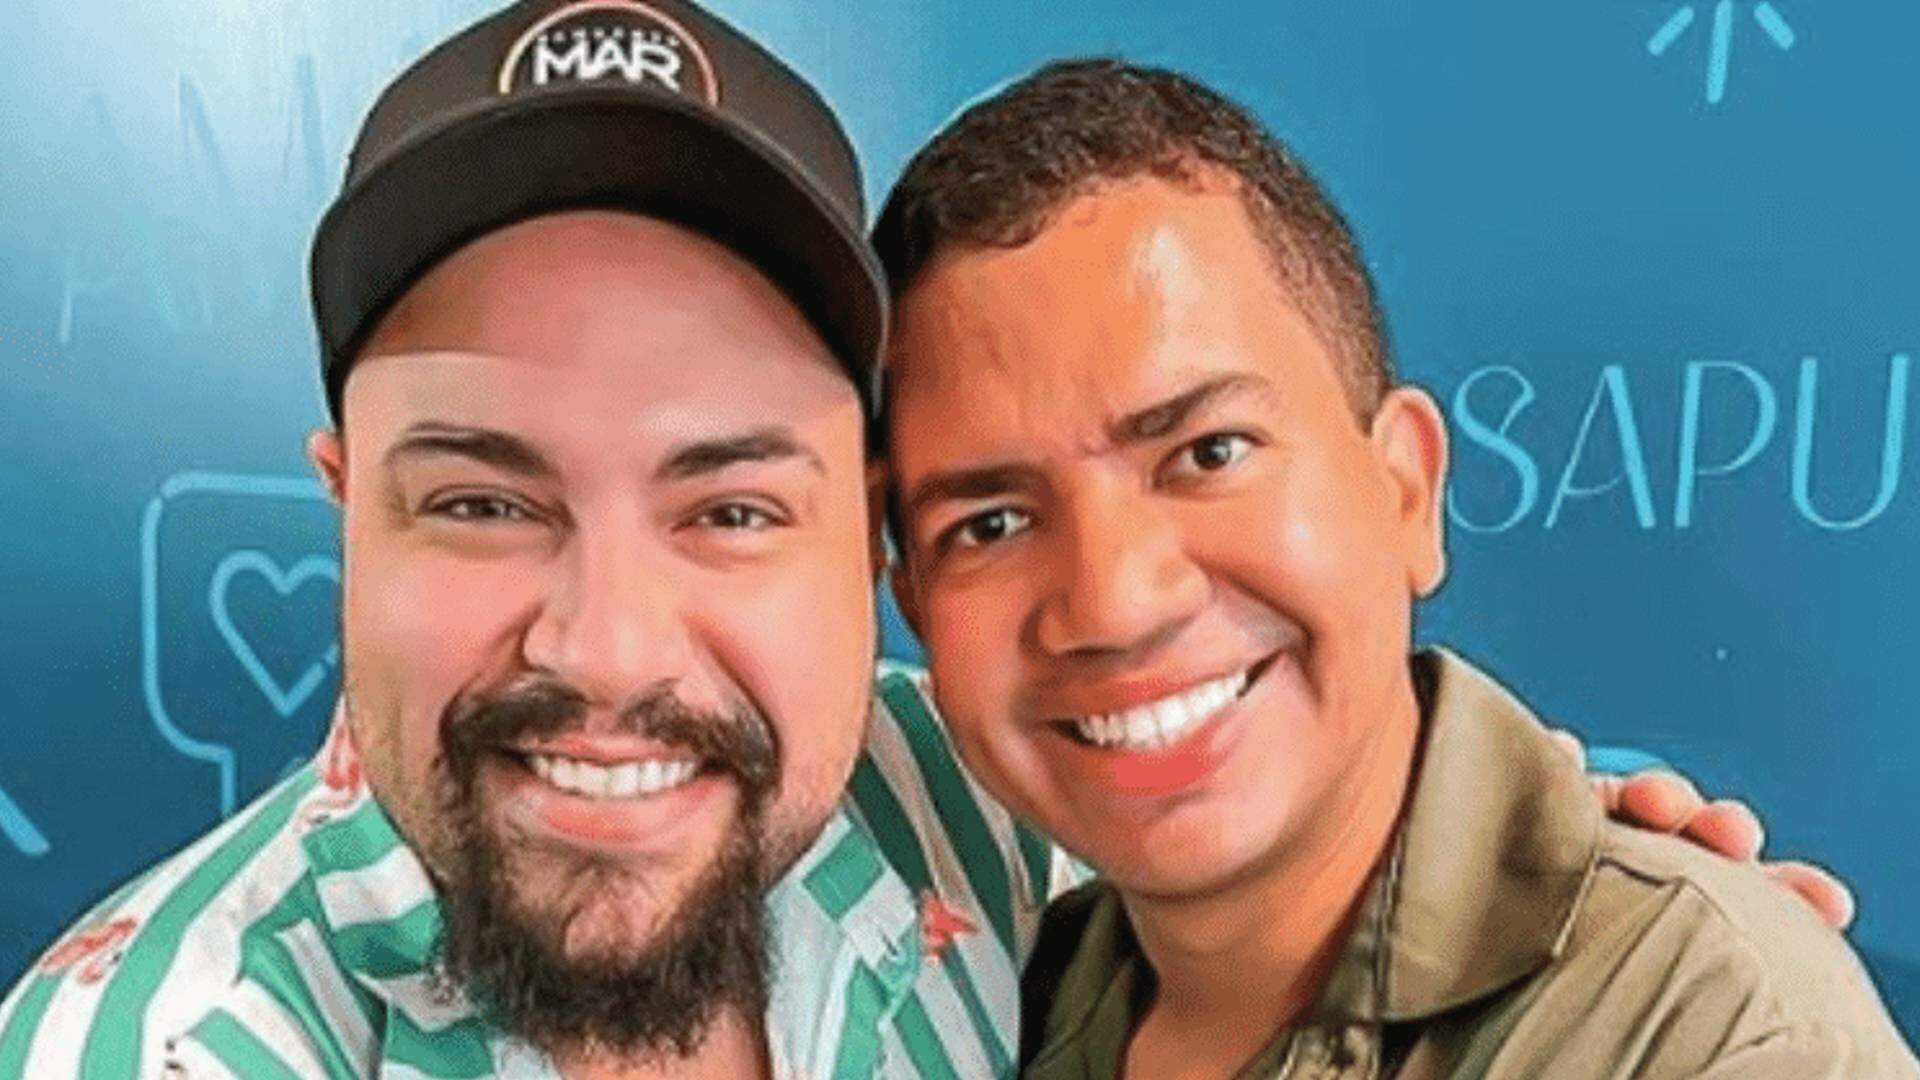 Exs-BBBs Bruno Gaga e Tiago Abravanel se encontram pela primeira vez: “Que alegria”